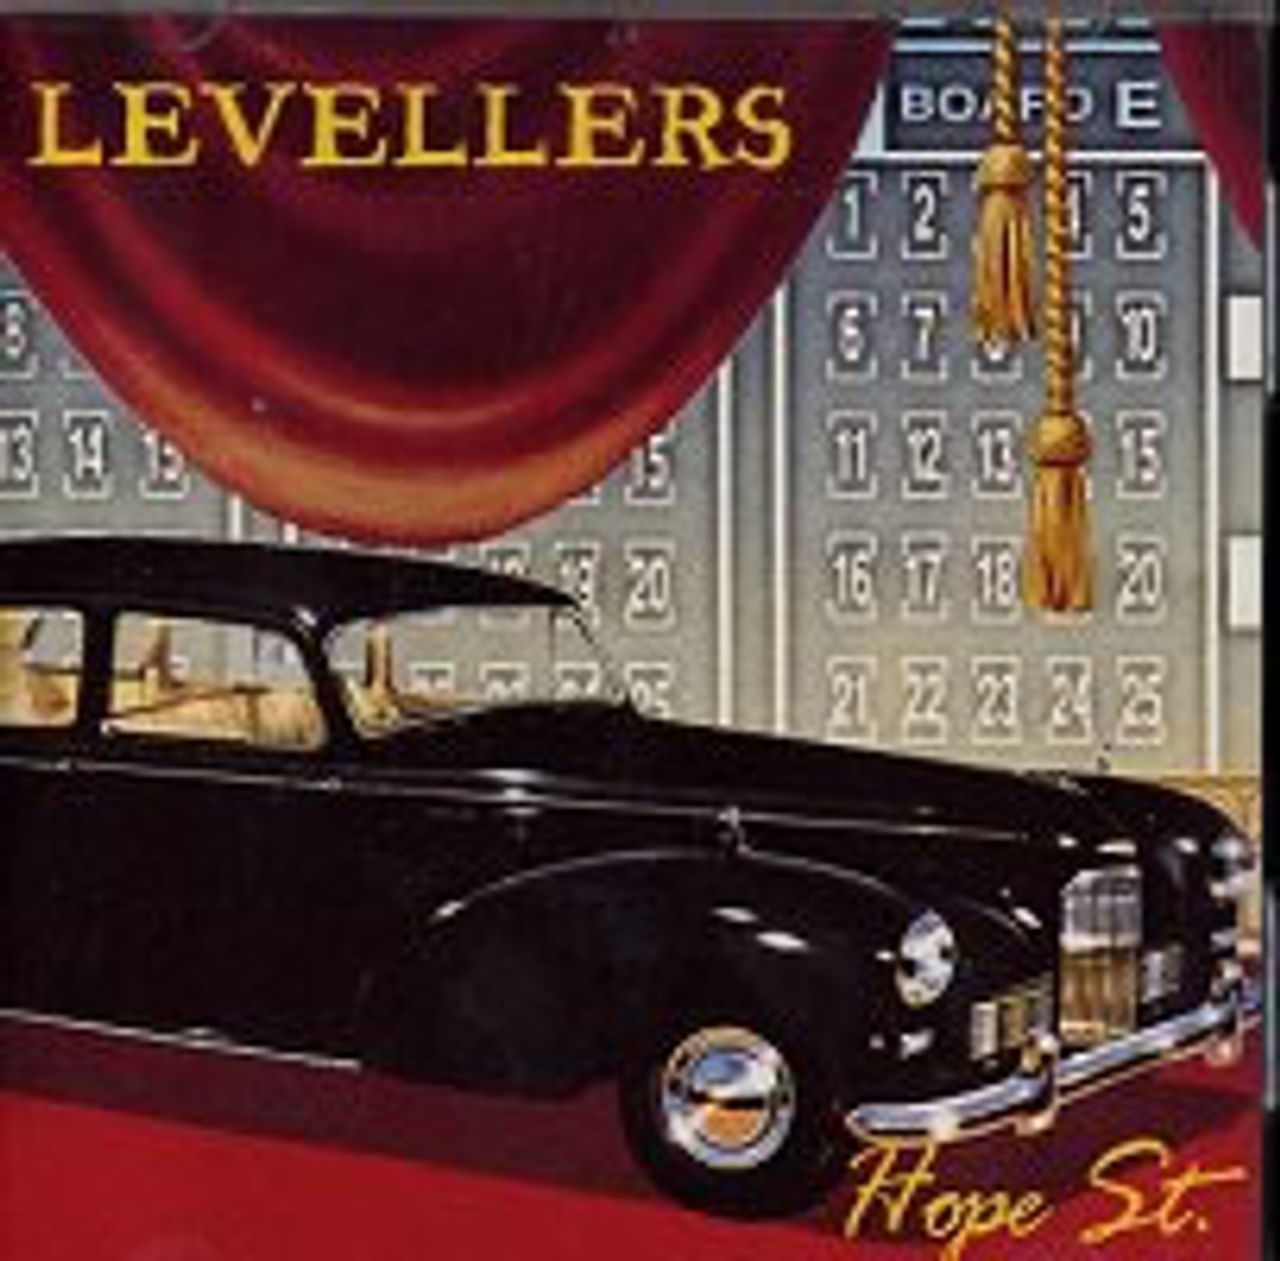 The Levellers Hope St. UK CD single — RareVinyl.com